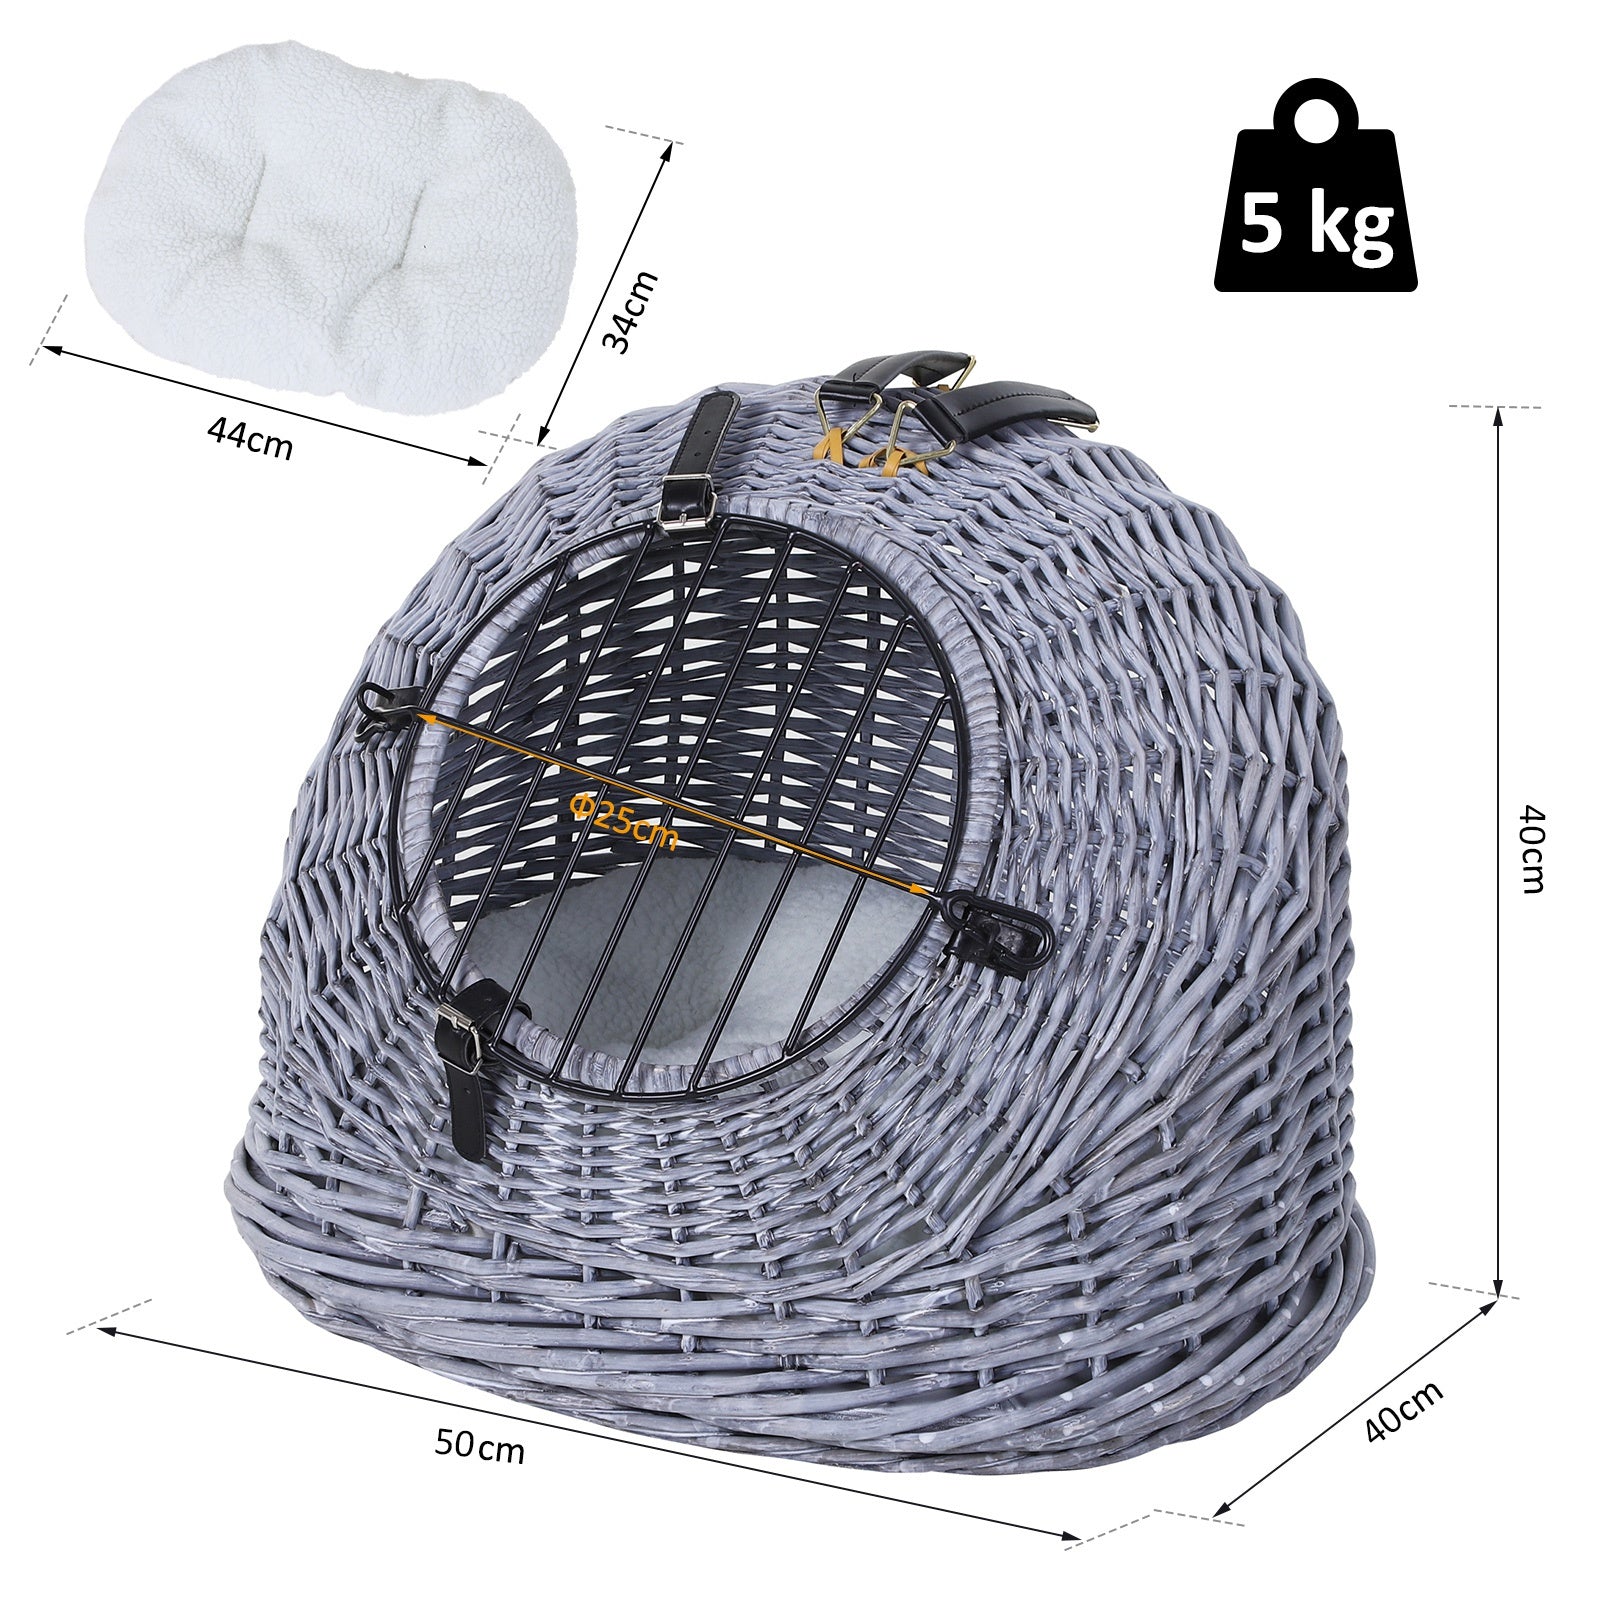 Cats Wicker Travel Carrier Basket w/ Plush Cushion Grey